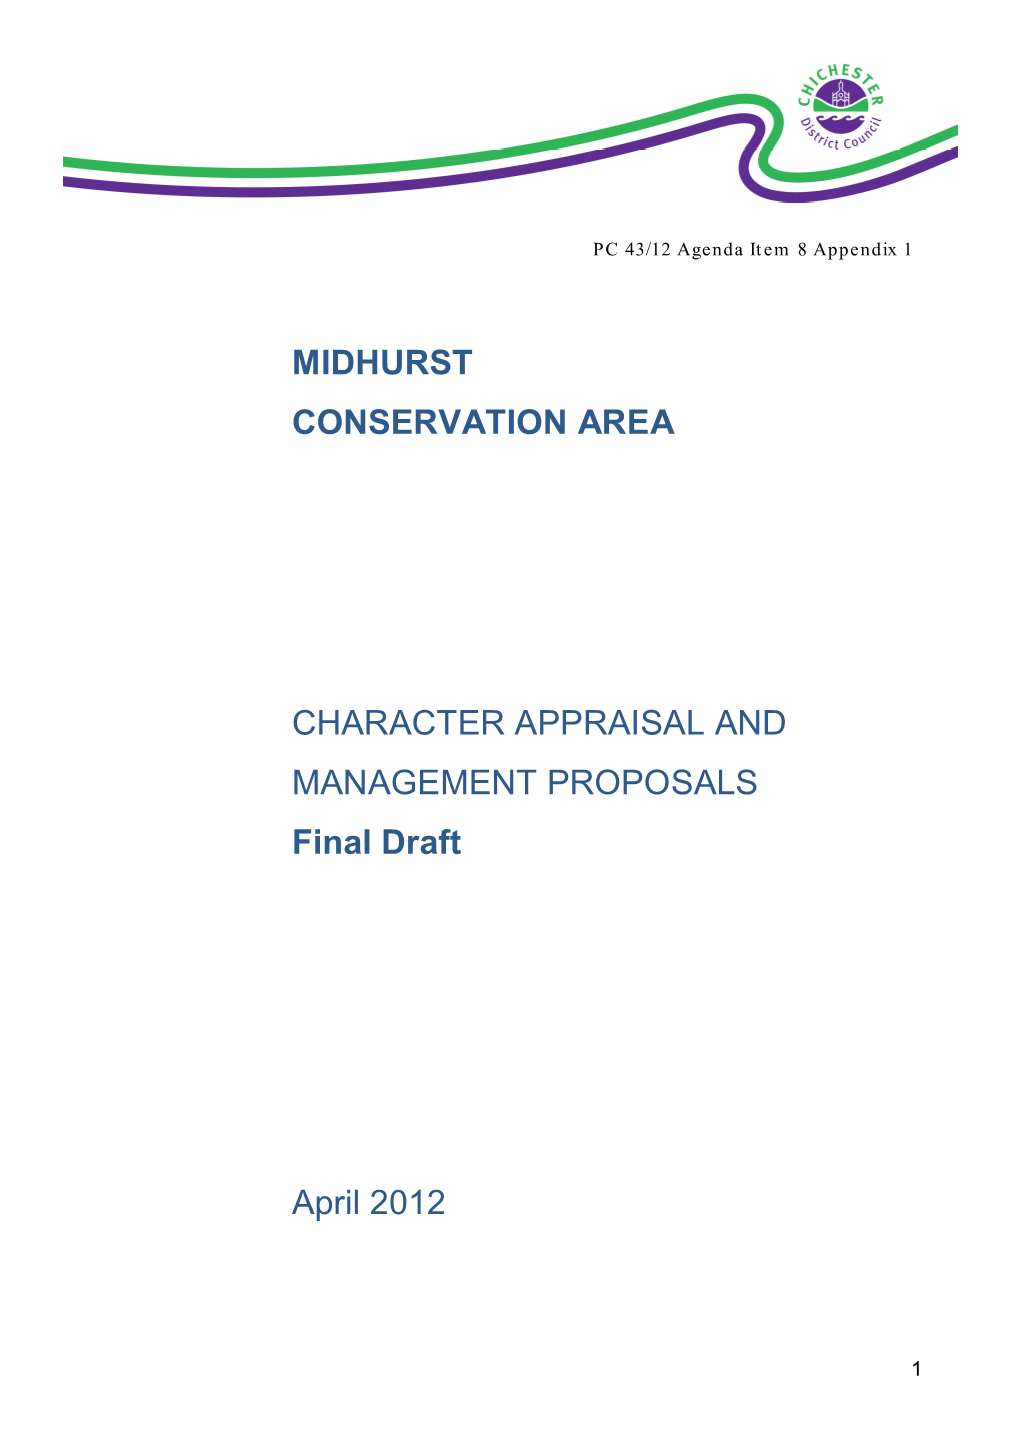 ……… Midhurst Conservation Area Character Appraisal